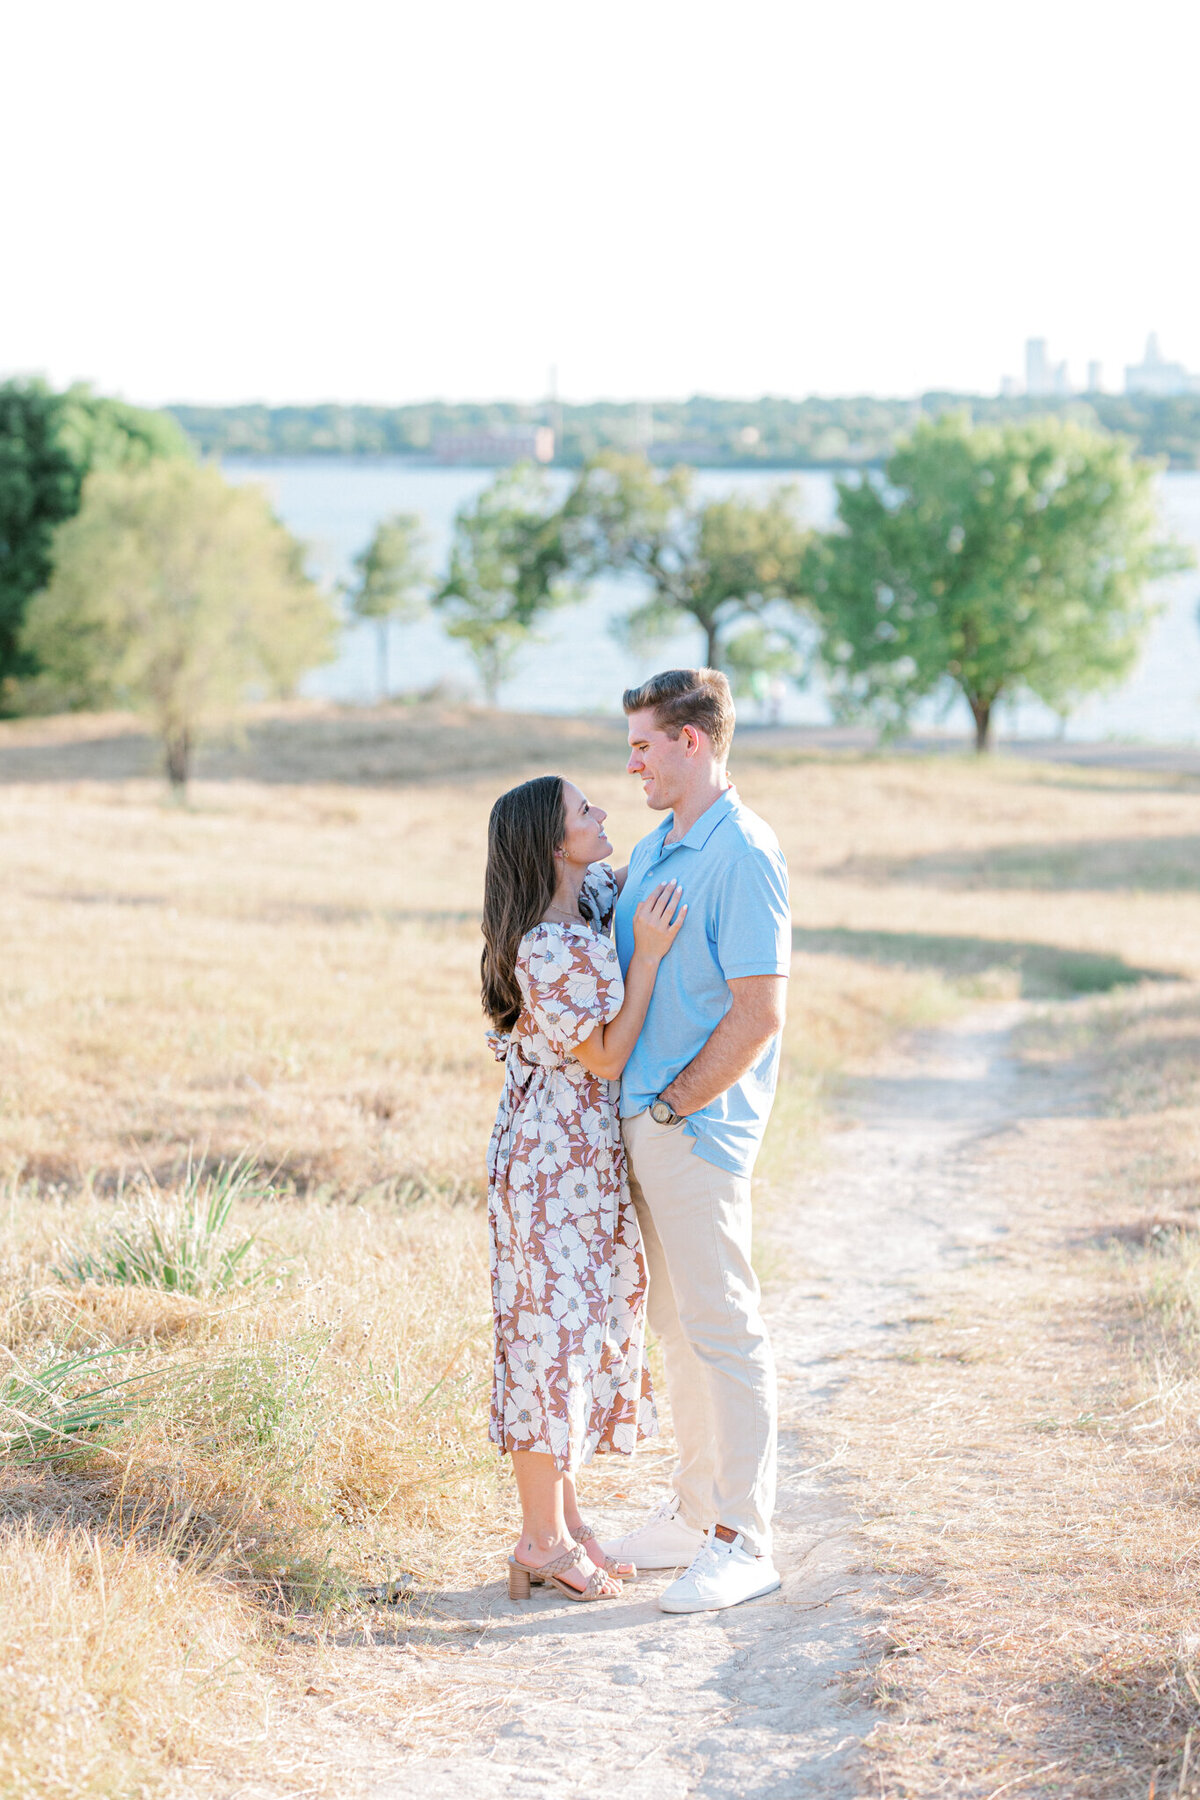 Allie & Nolan's Engagement Session at White Rock Lake | Dallas Wedding Photographer | Sami Kathryn Photography-9